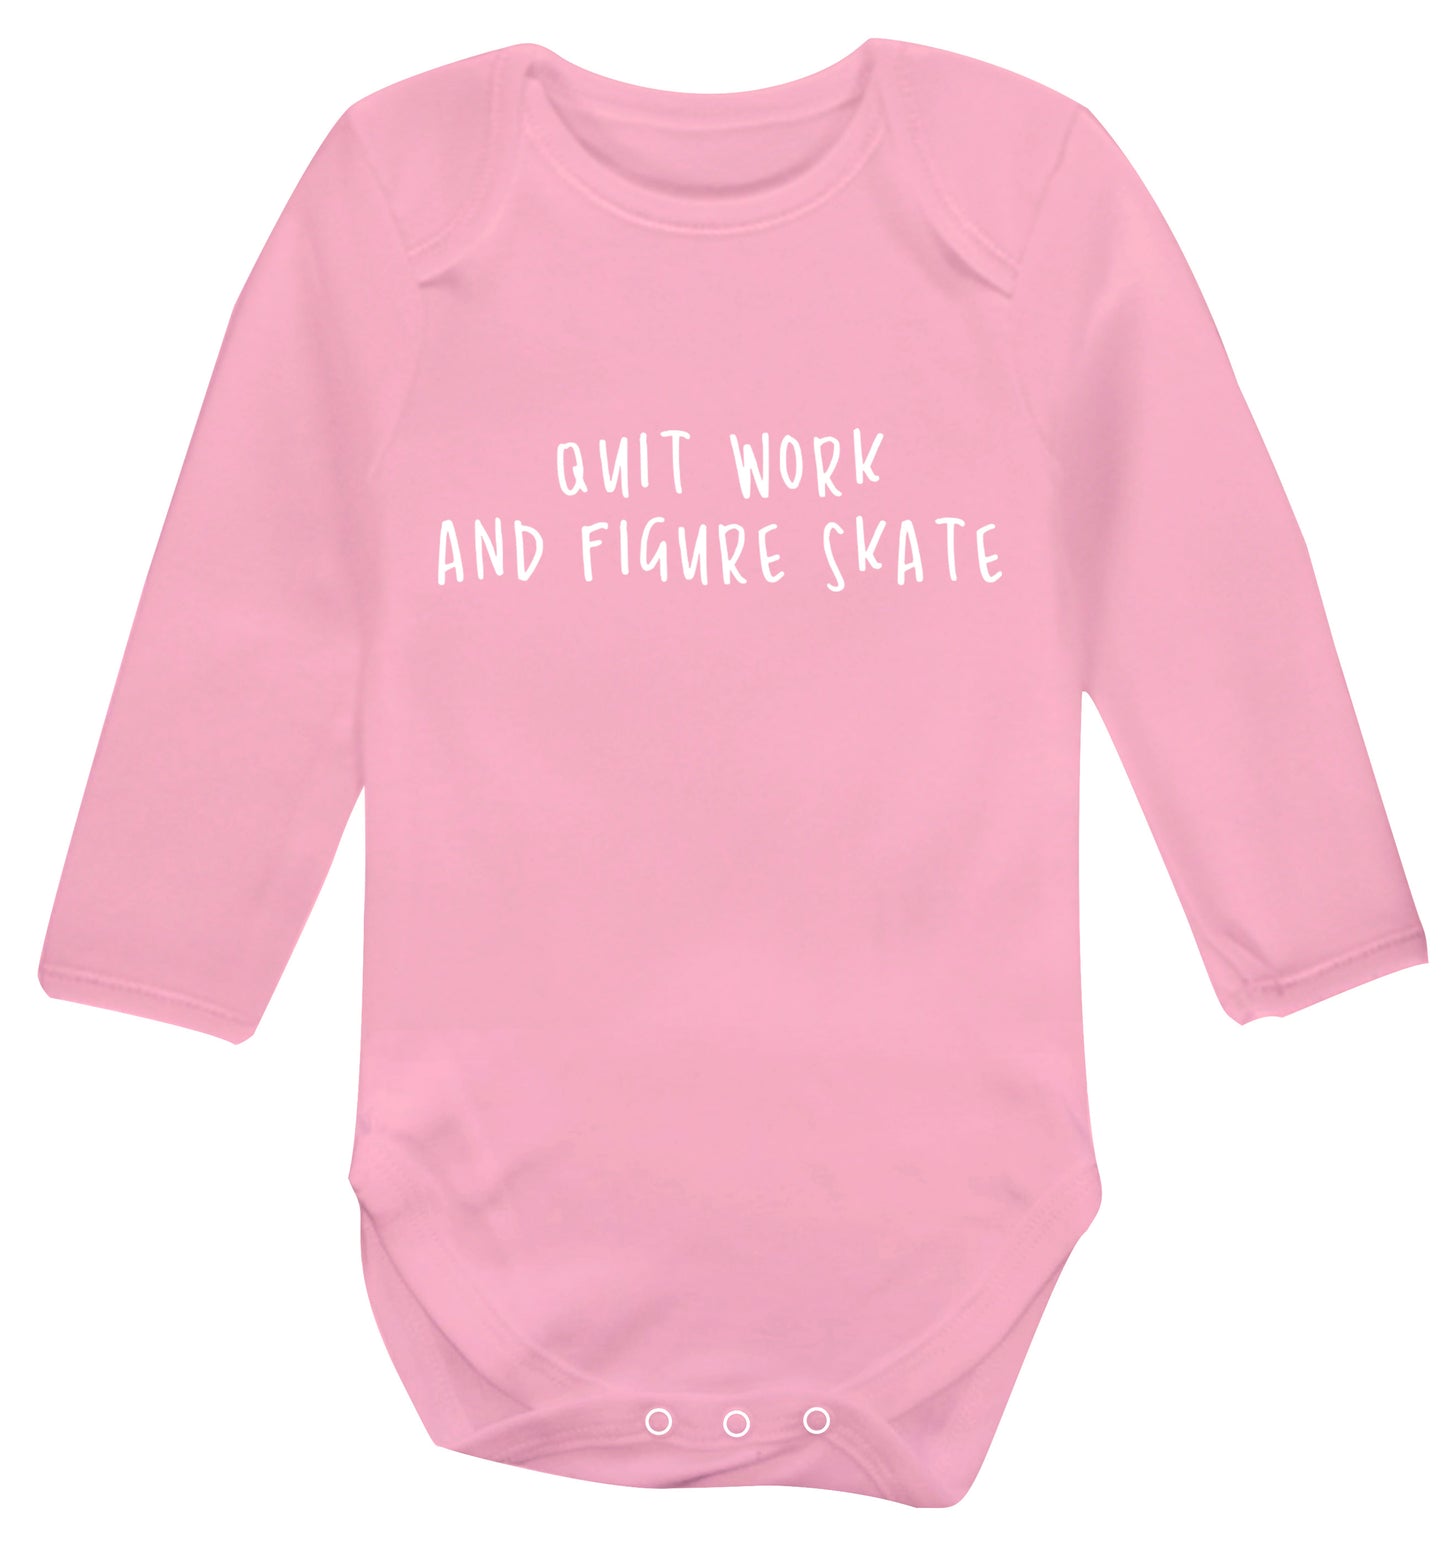 Quit work figure skate Baby Vest long sleeved pale pink 6-12 months